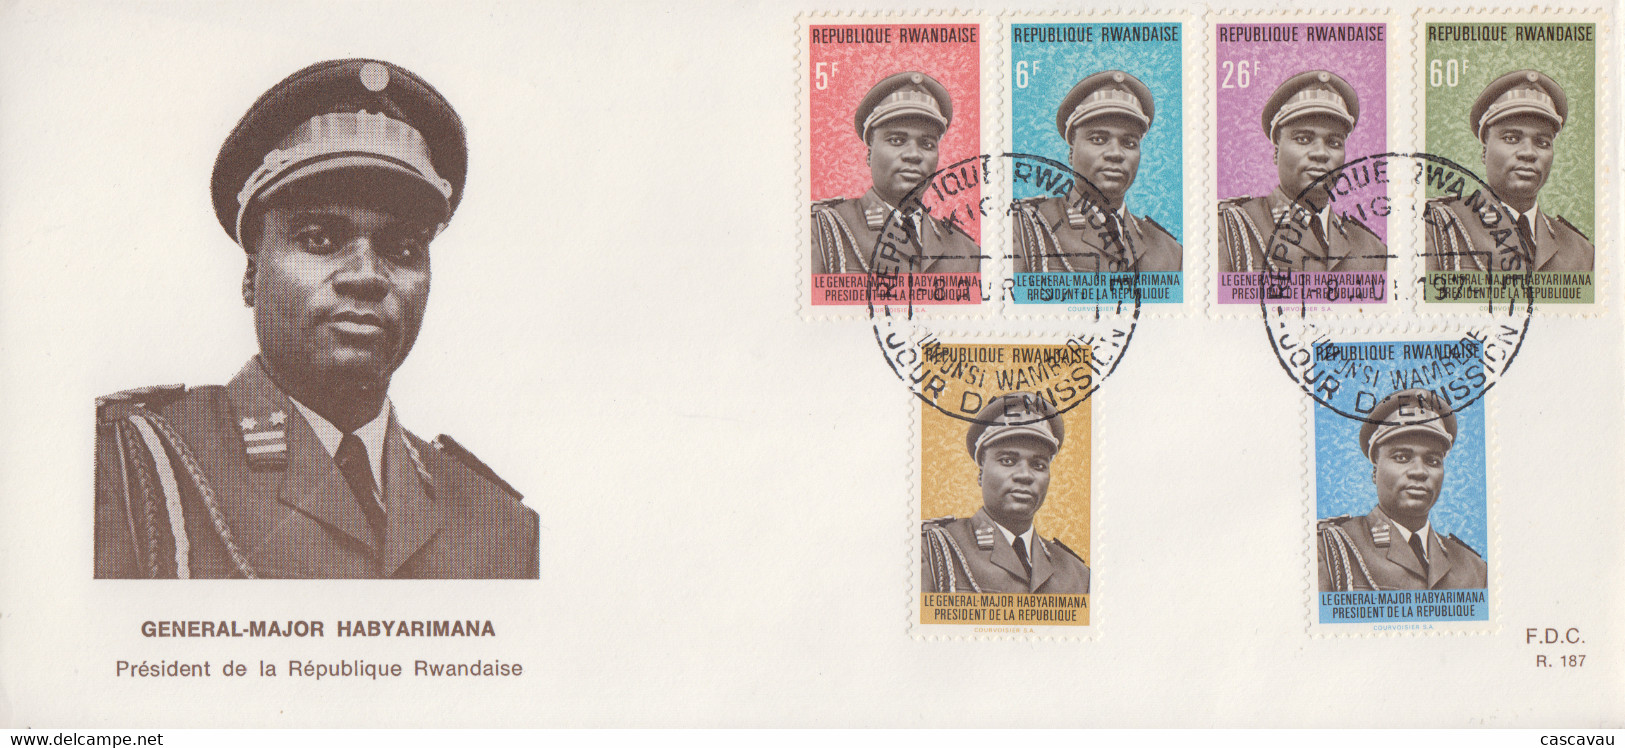 Enveloppe  FDC   1er  Jour   RWANDA   Président   Général - Major   HABYARIMANA   1970 - 1970-1979